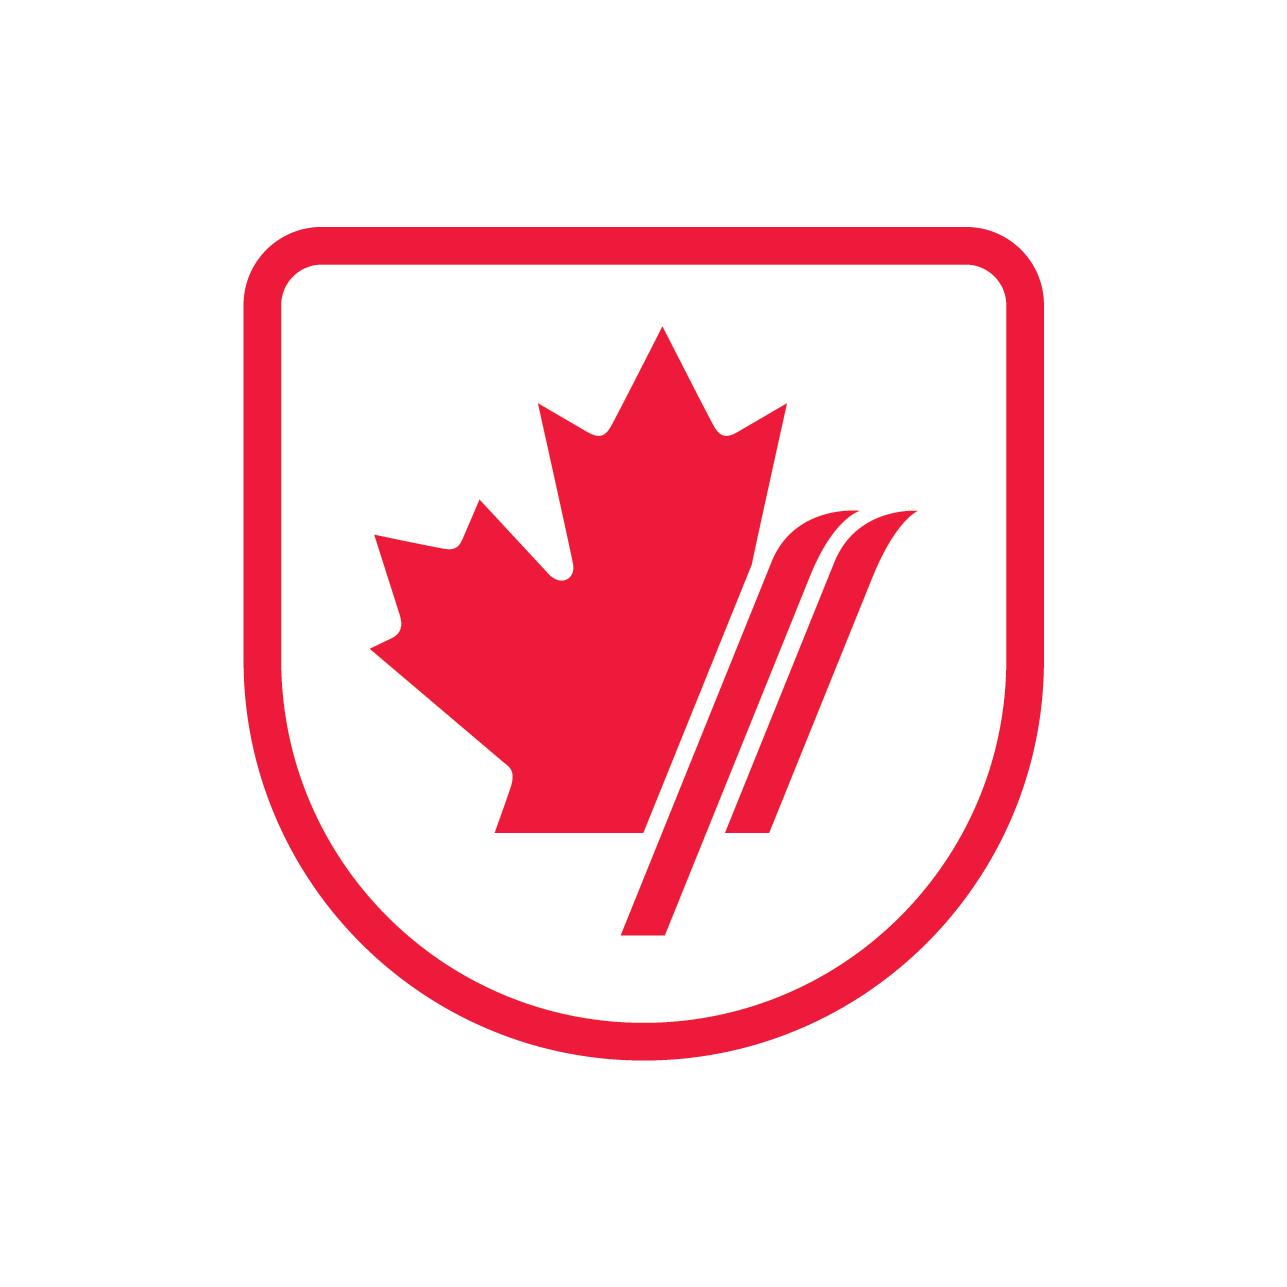 Canada Maple Leaf Olympic Logo - Sports | Team Canada - Official Olympic Team Website